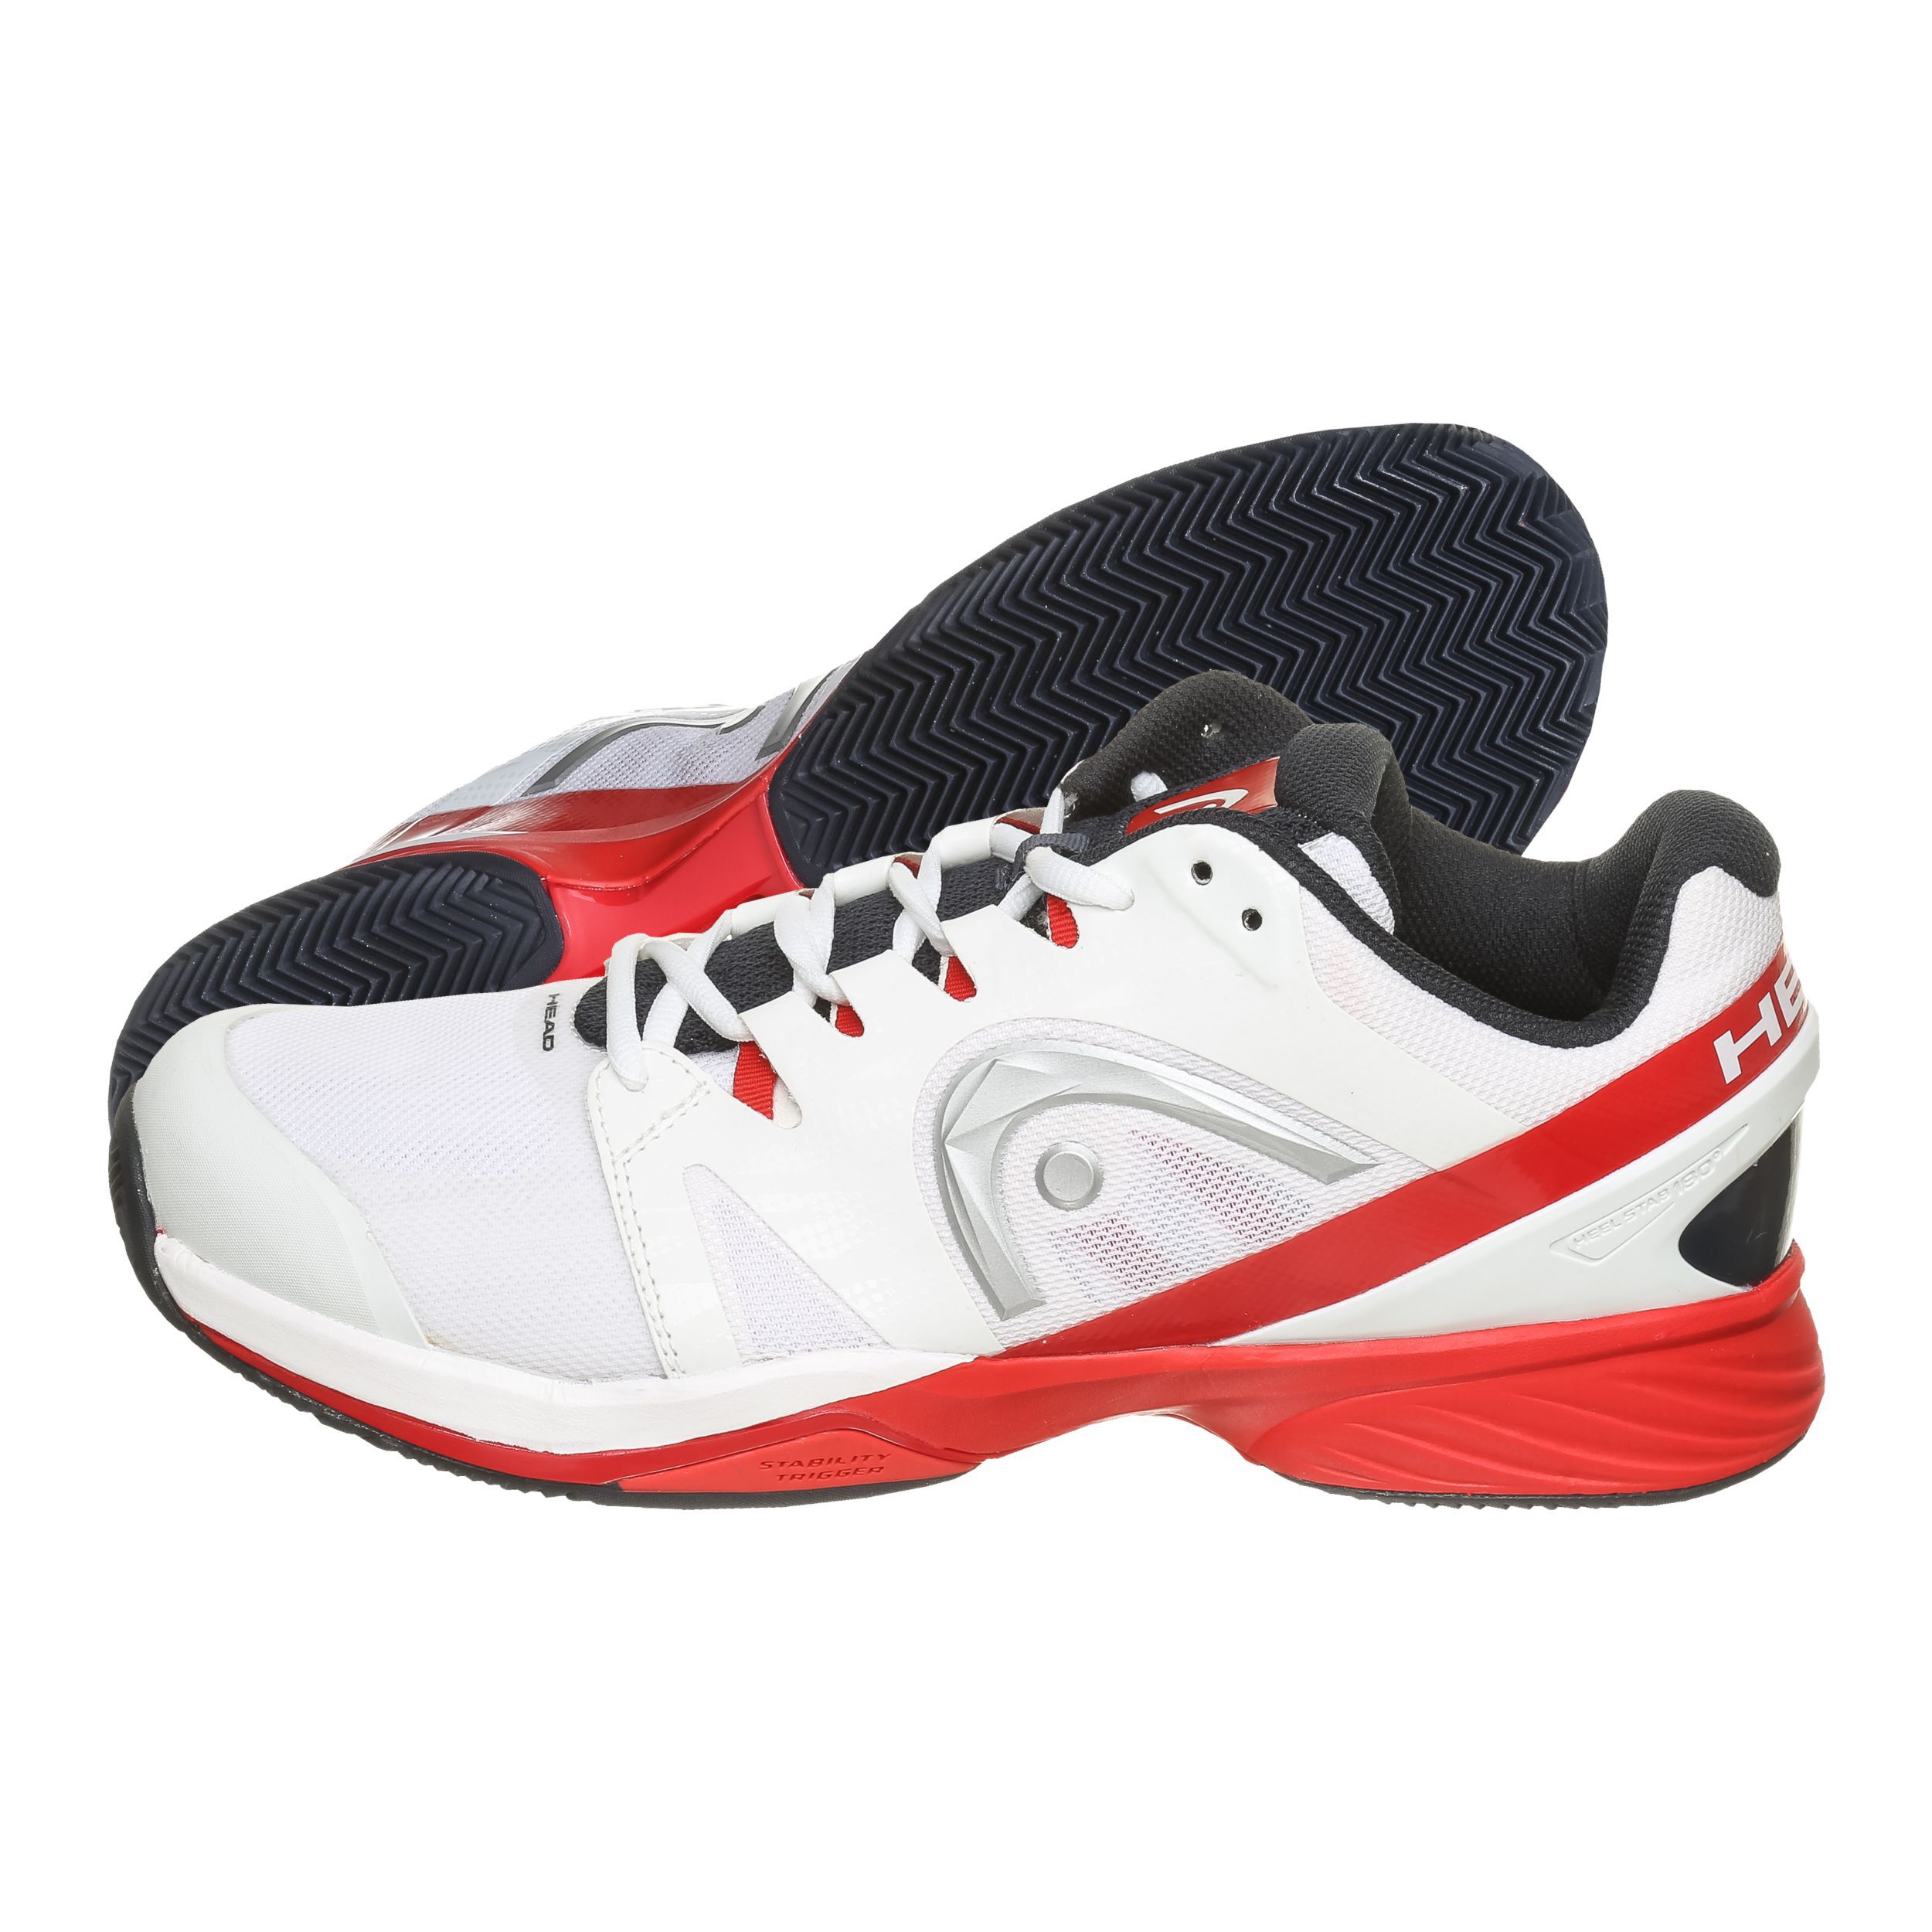 head nitro pro men's tennis shoes